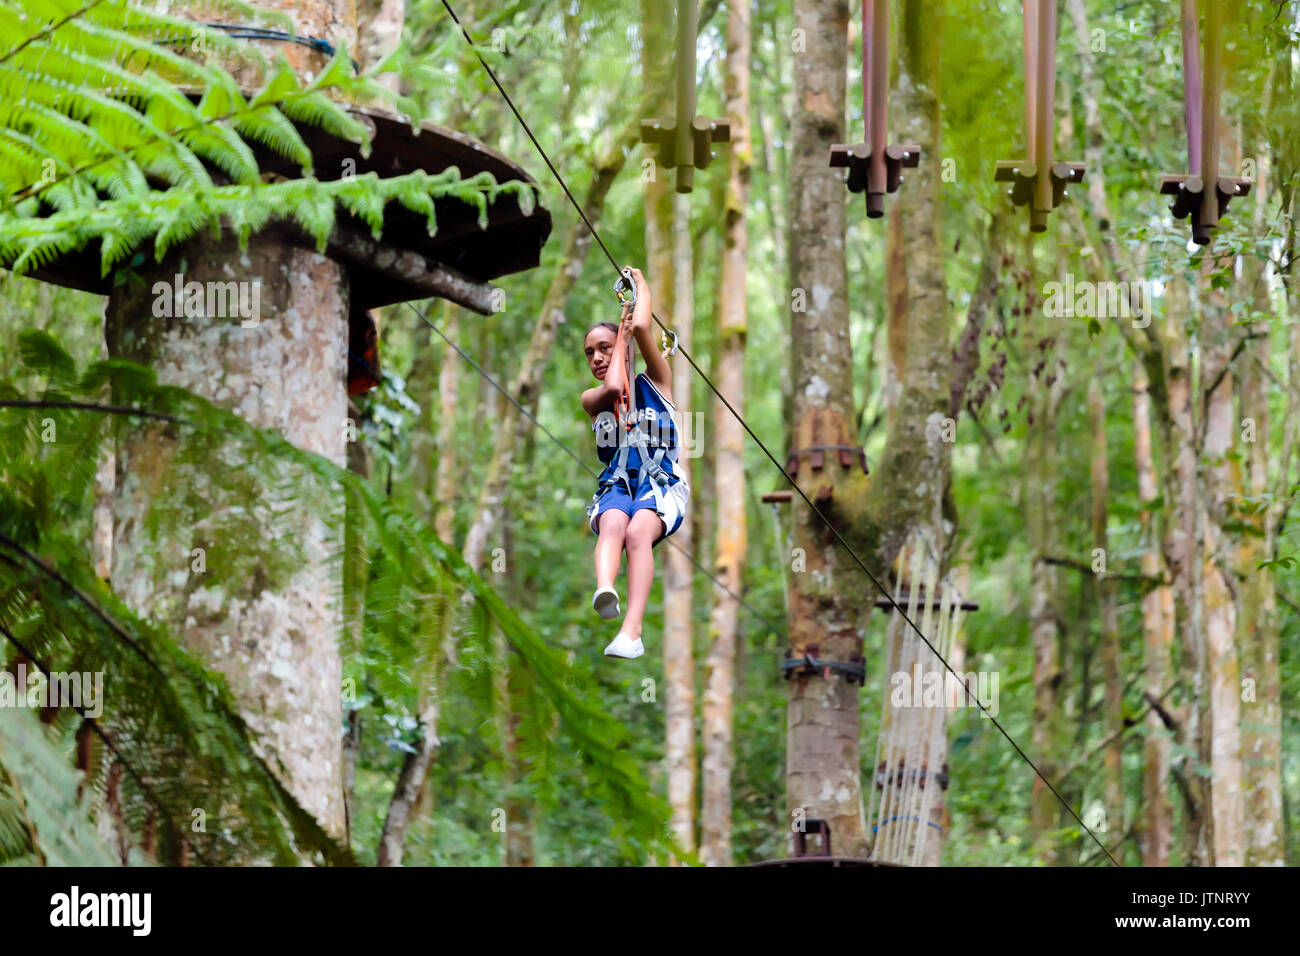 A girl descends a zipline at a Treetop Adventure Park, Bali, Indonesia Stock Photo